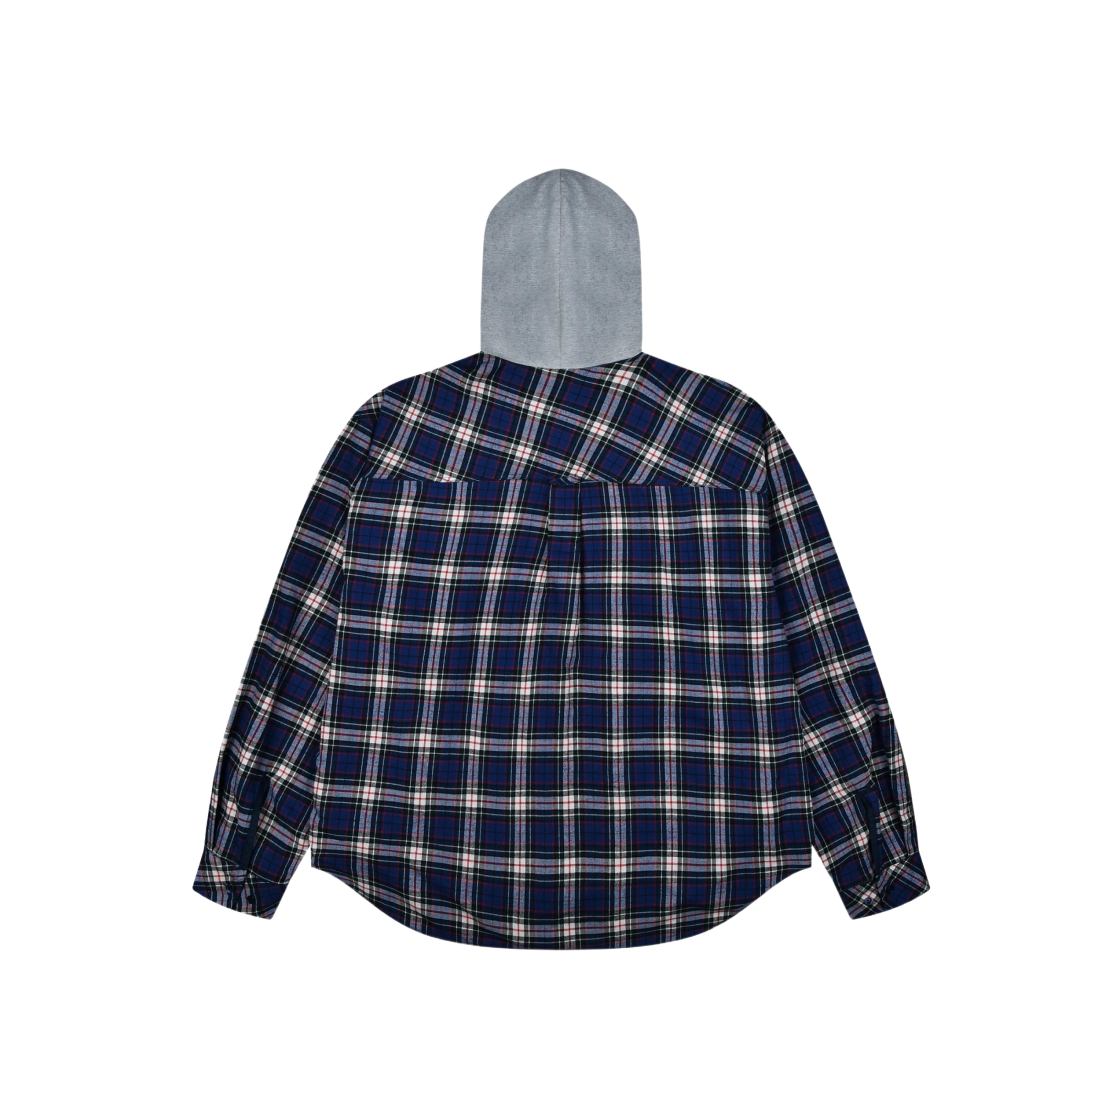 BlackYellowProject G/R Reversible Hood Check Shirts